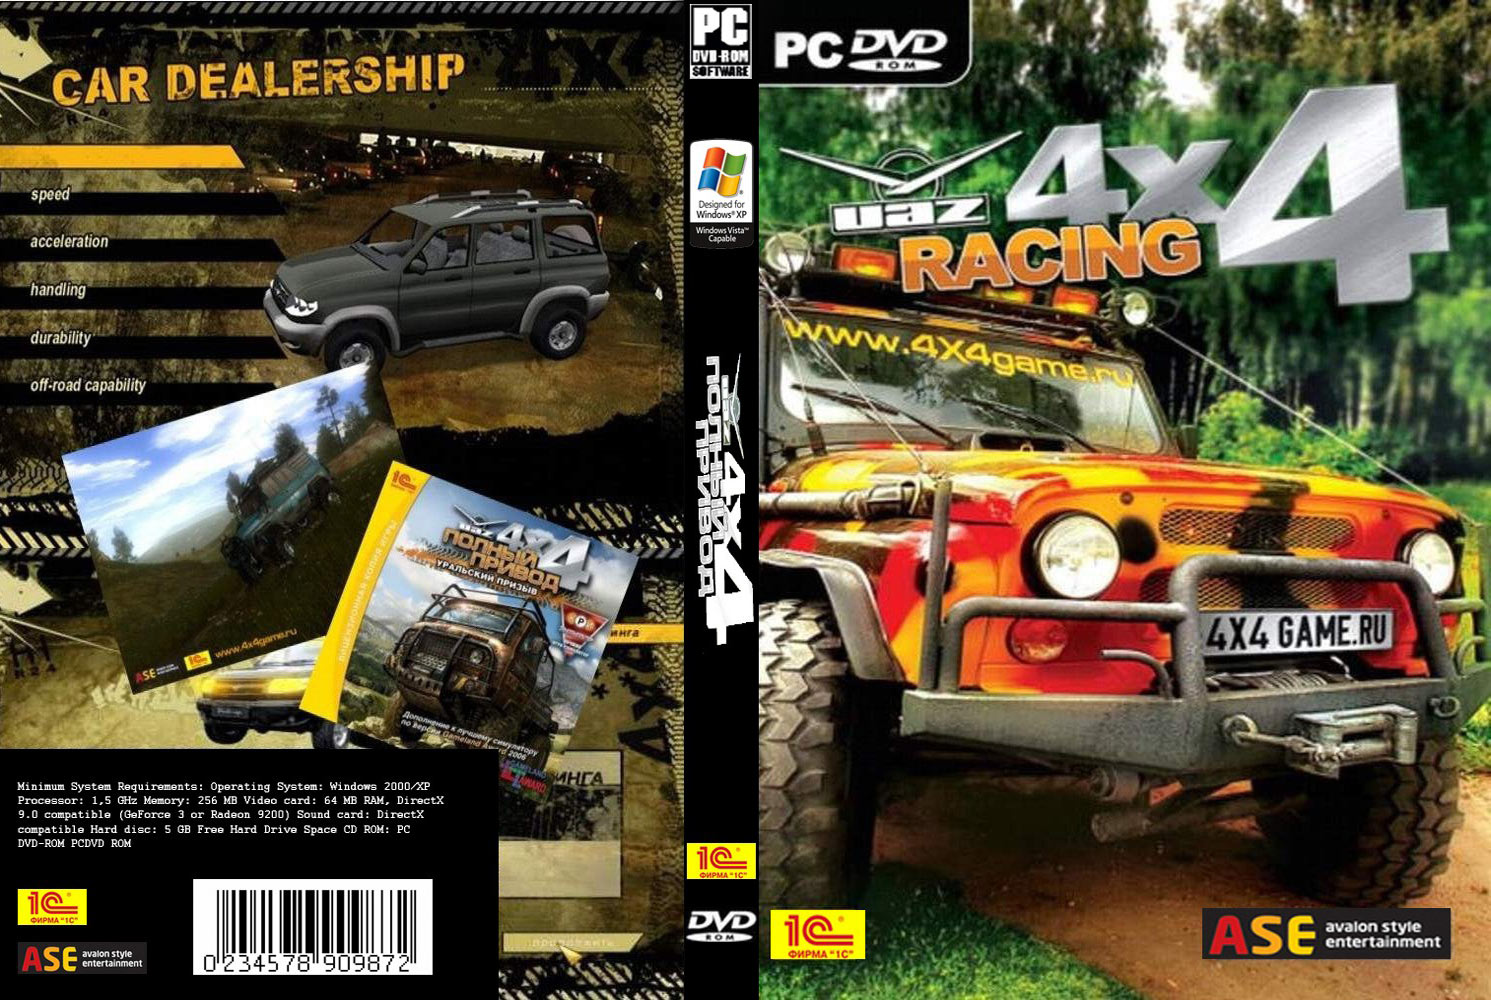 UAZ Racing 4x4 - DVD obal